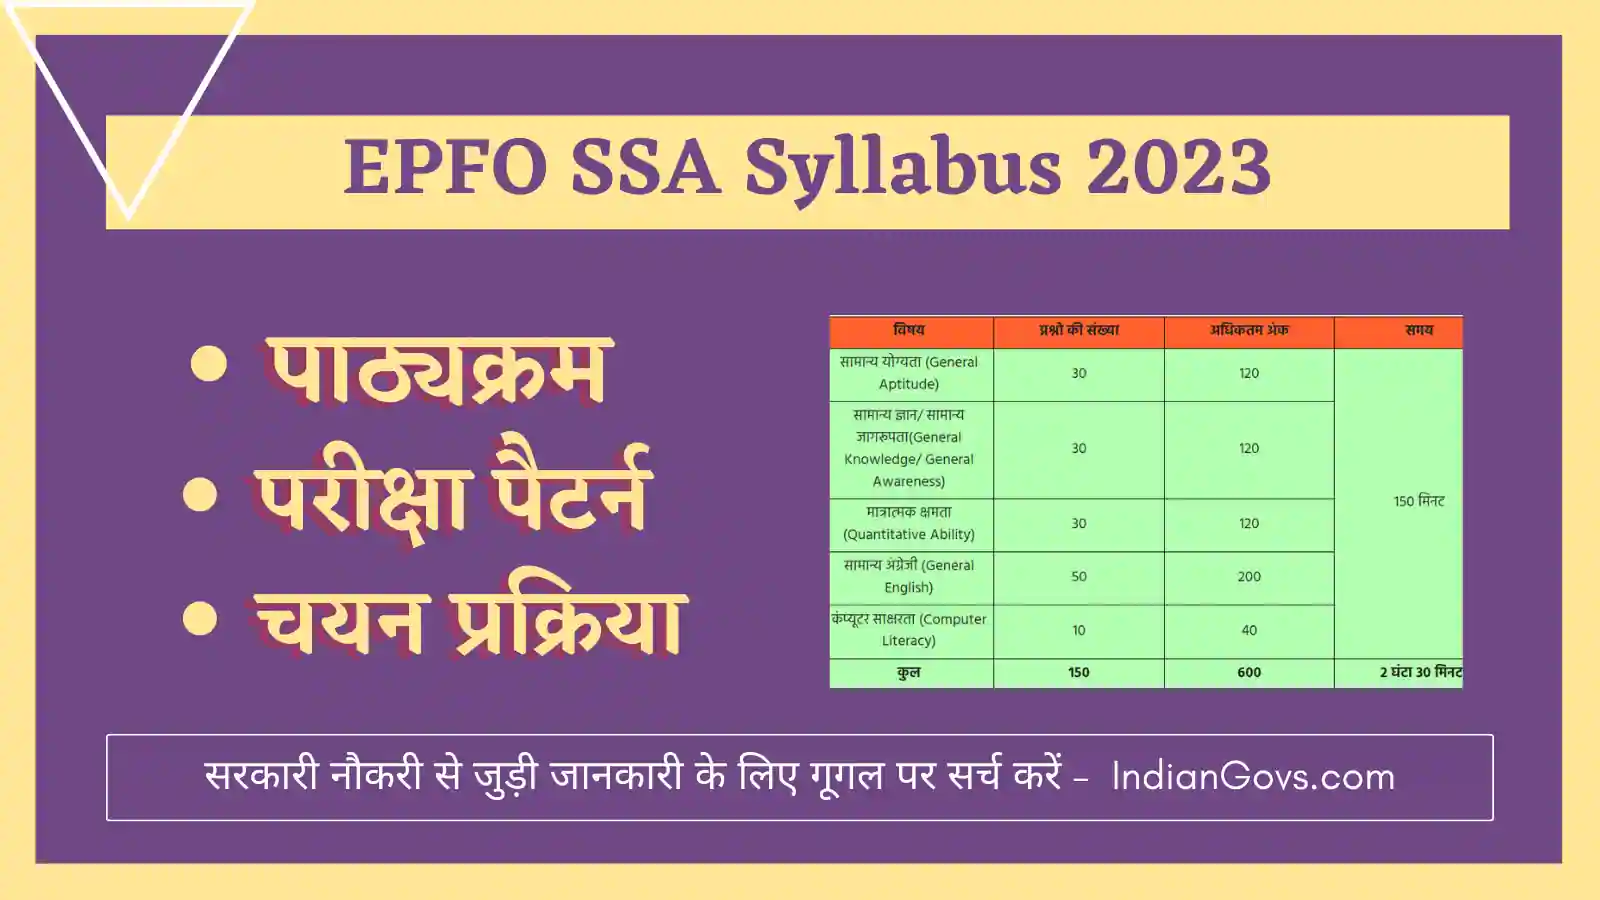 EPFO SSA Syllabus 2023 in Hindi